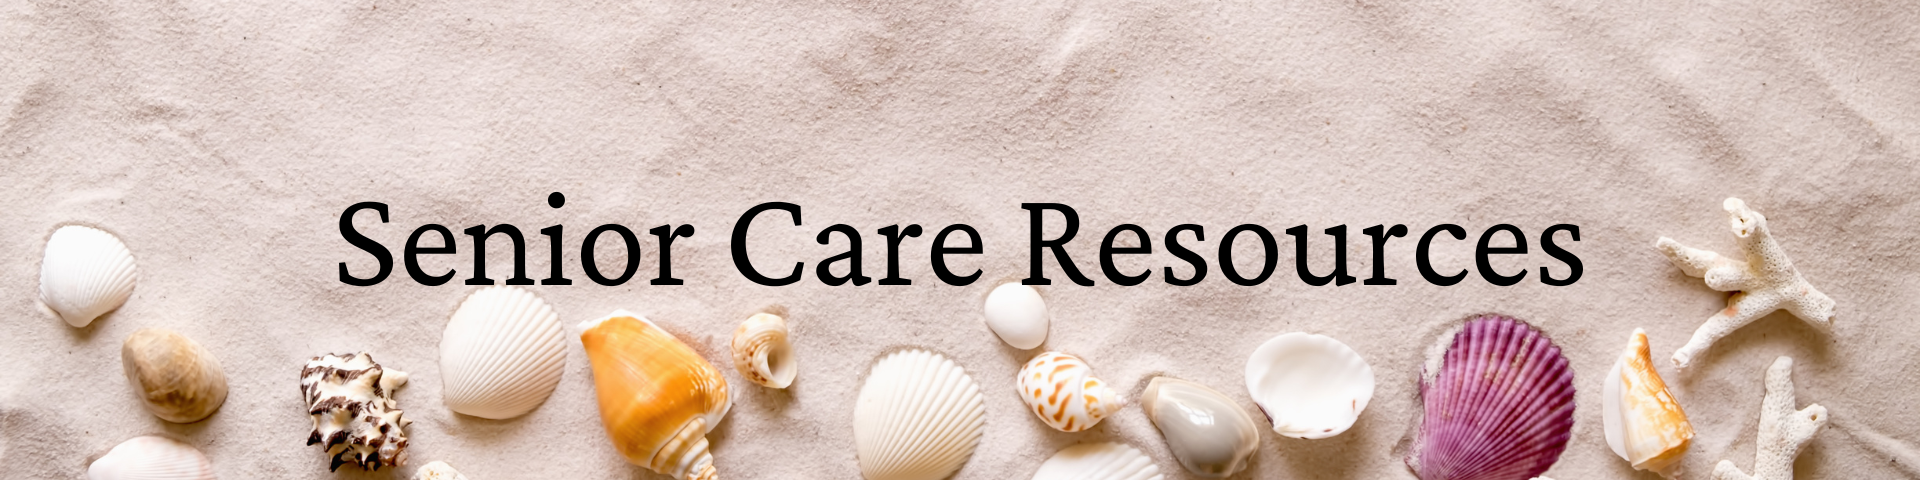 Senior Care Resources (Link)